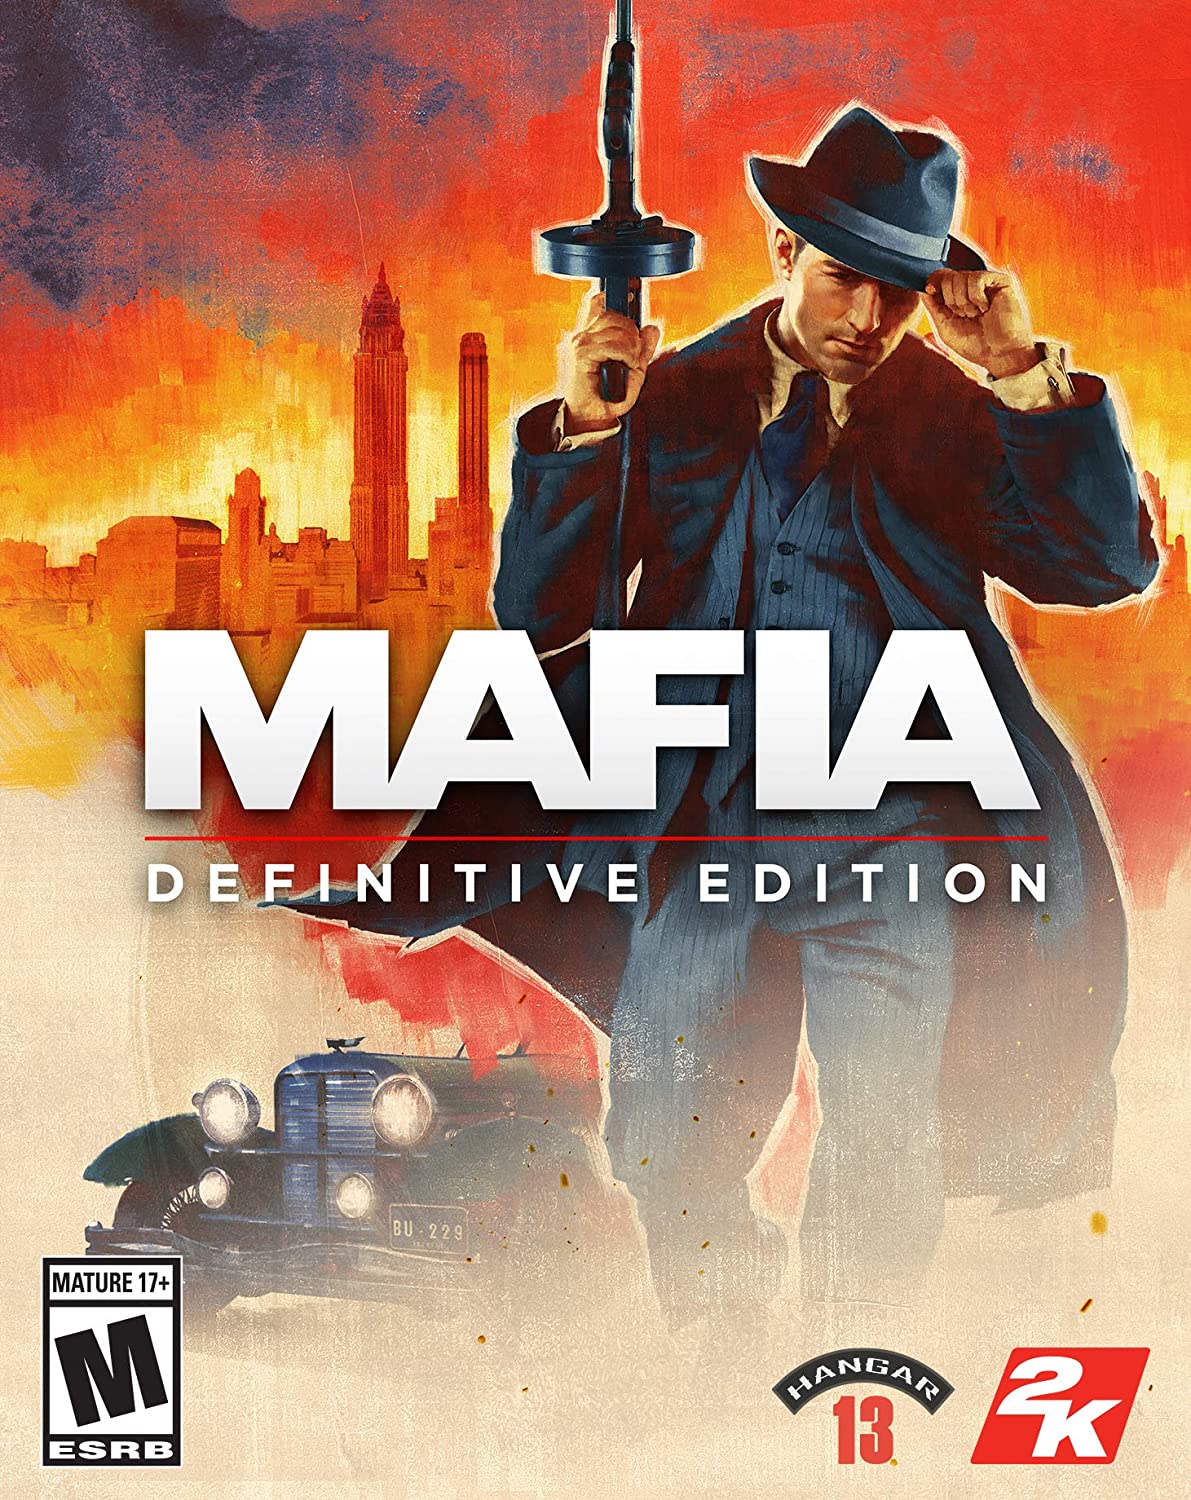 Mafia Definitive Edition player count stats